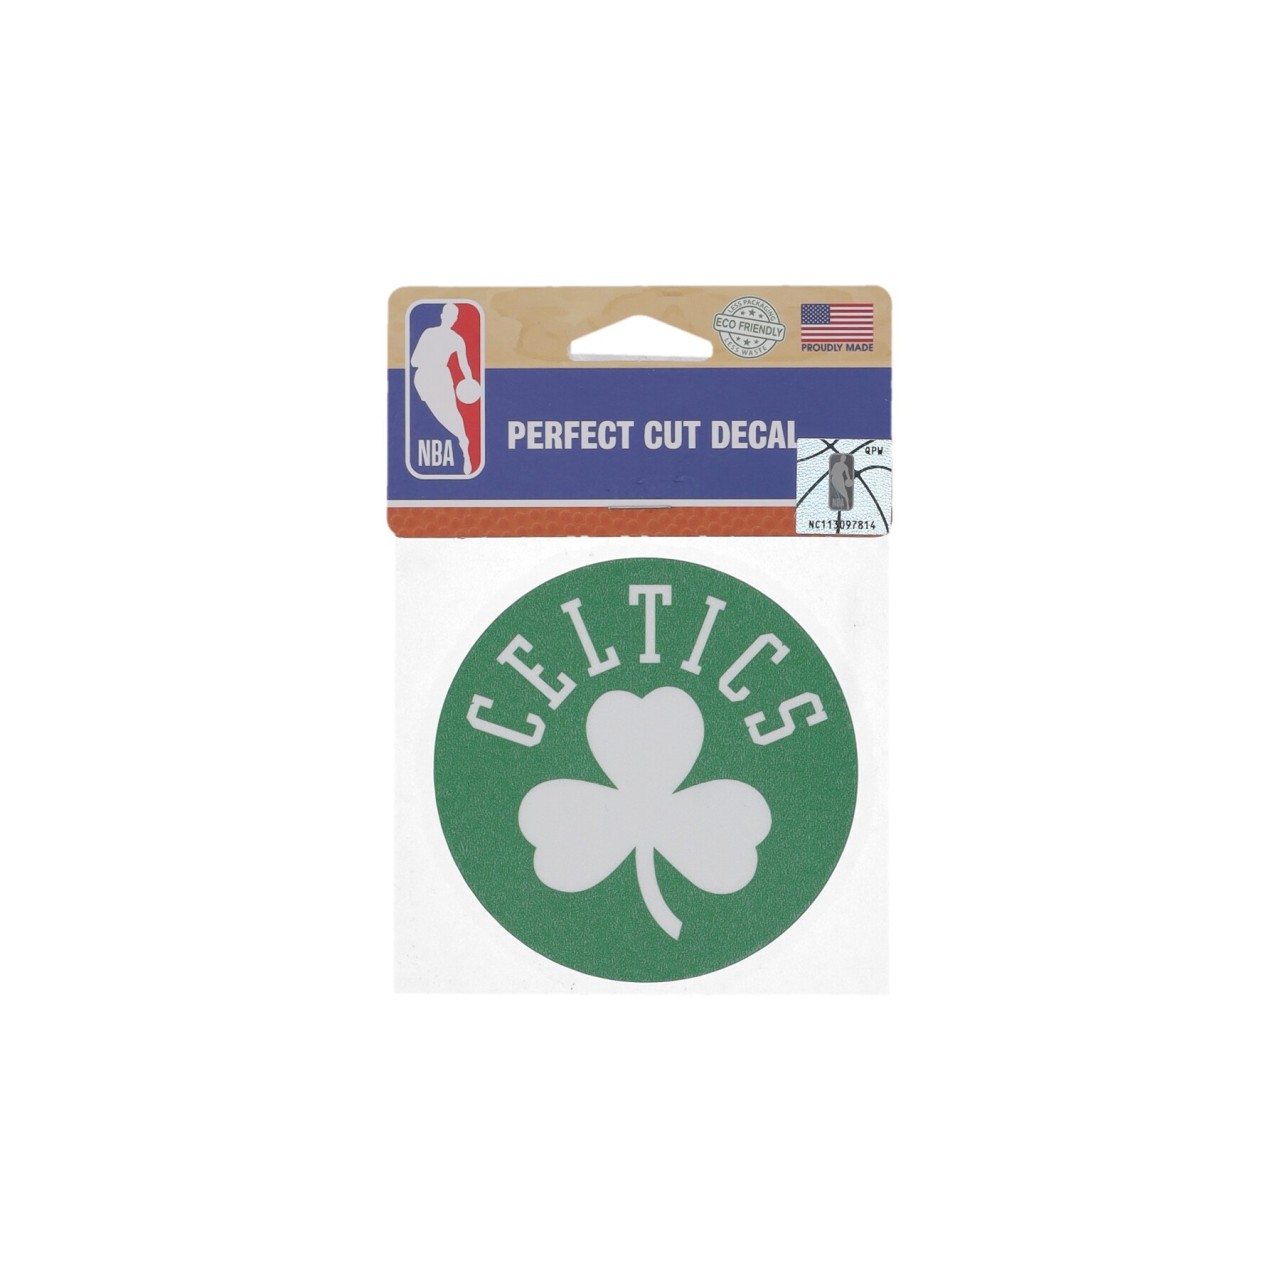 WINCRAFT NBA 4 x 4” PERFECT CUT DECAL BOSCEL 21741010